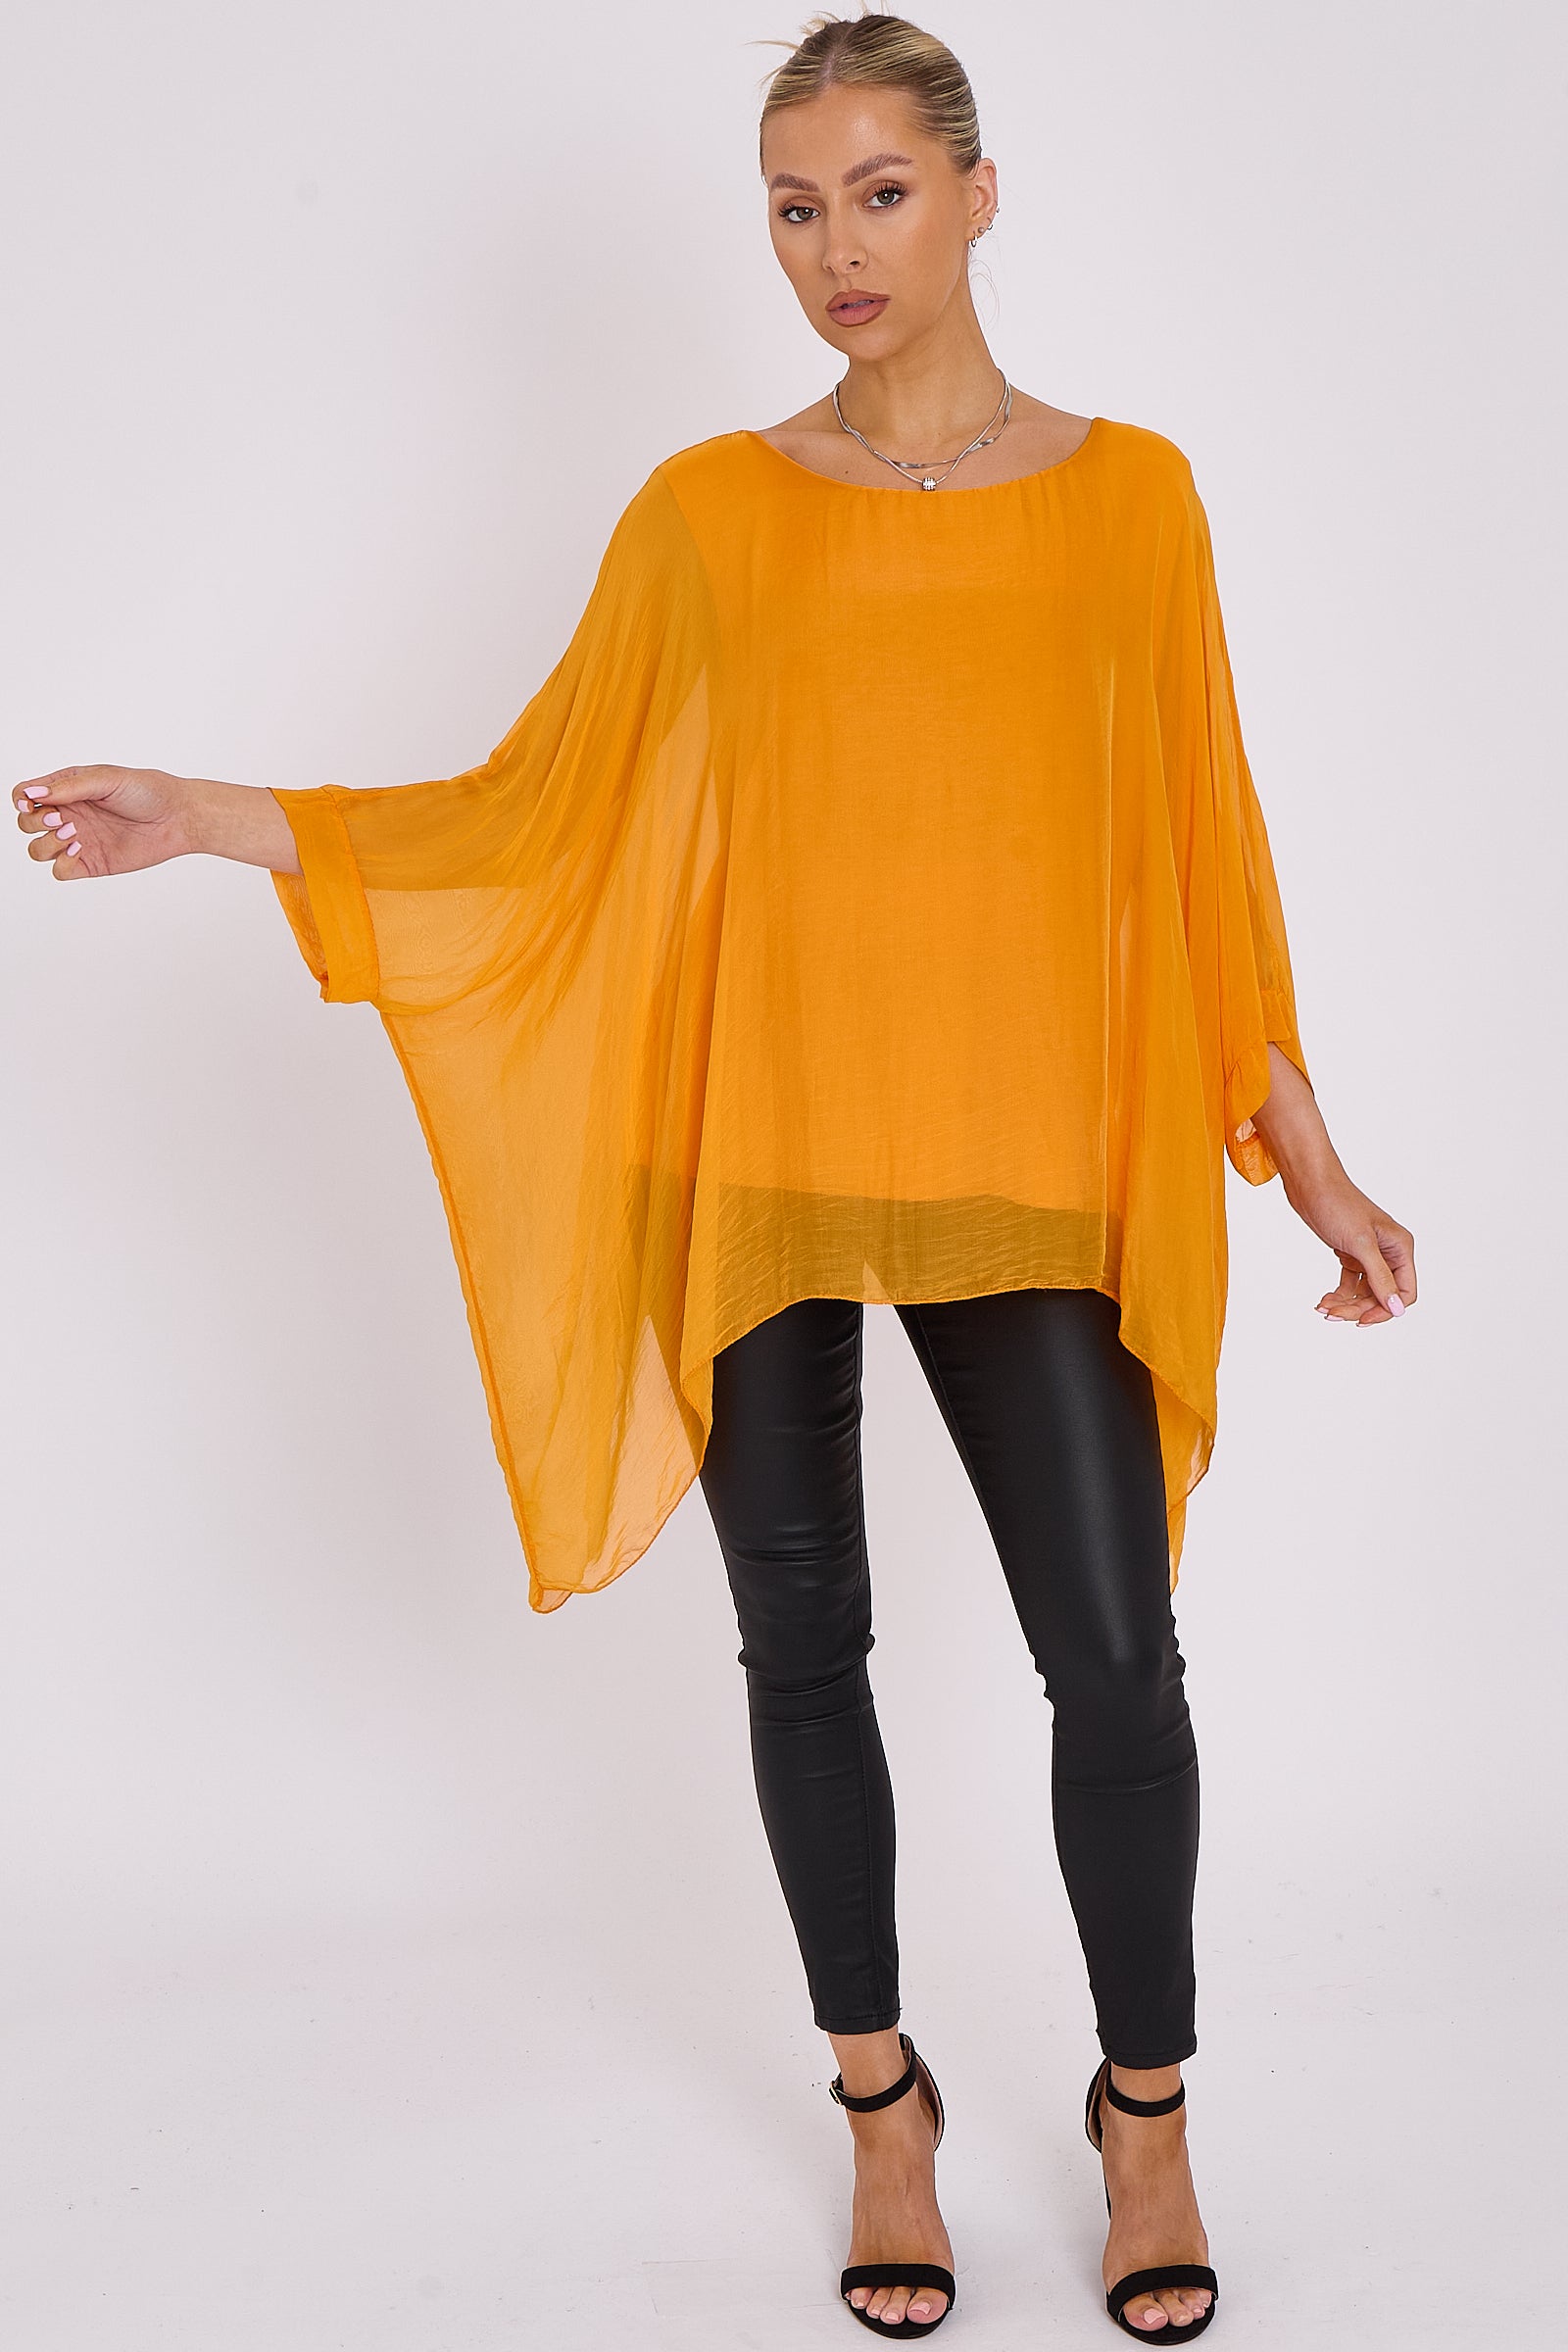 Orange Silk Batwing Sleeve Top Blouse